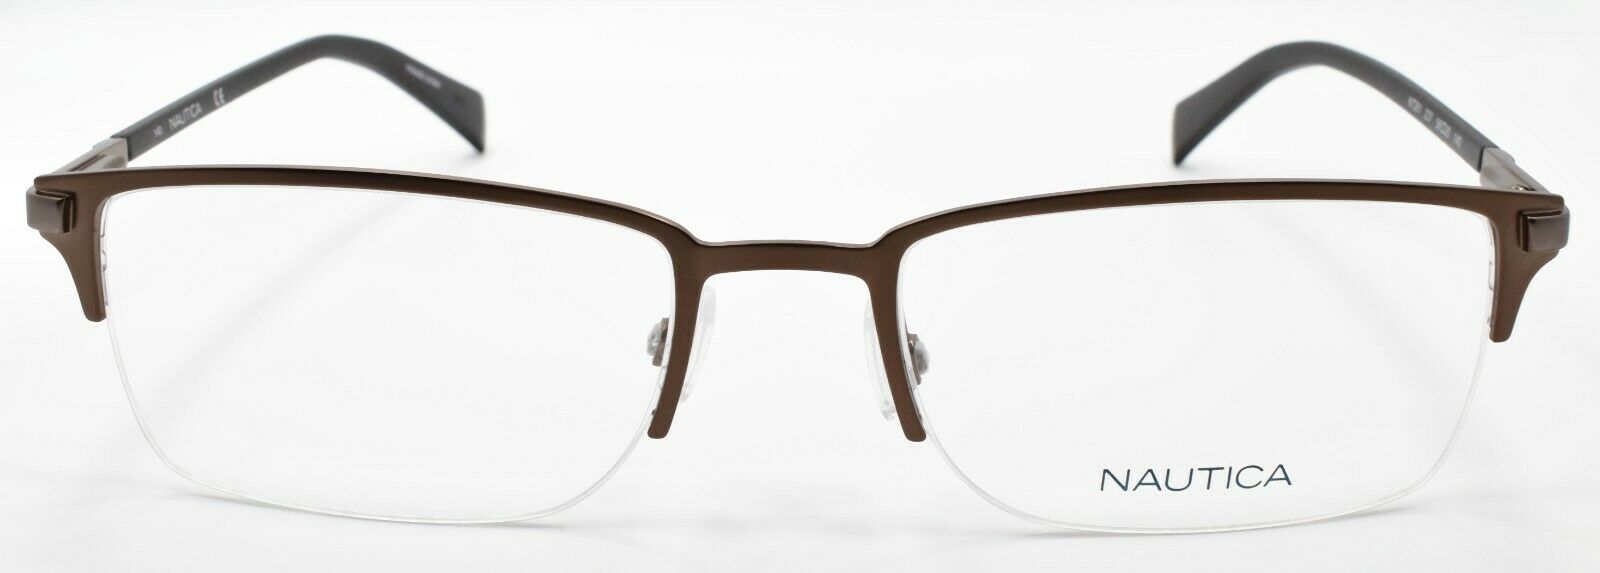 2-Nautica N7281 237 Men's Eyeglasses Frames Half-rim 56-20-140 Matte Brown-688940457452-IKSpecs